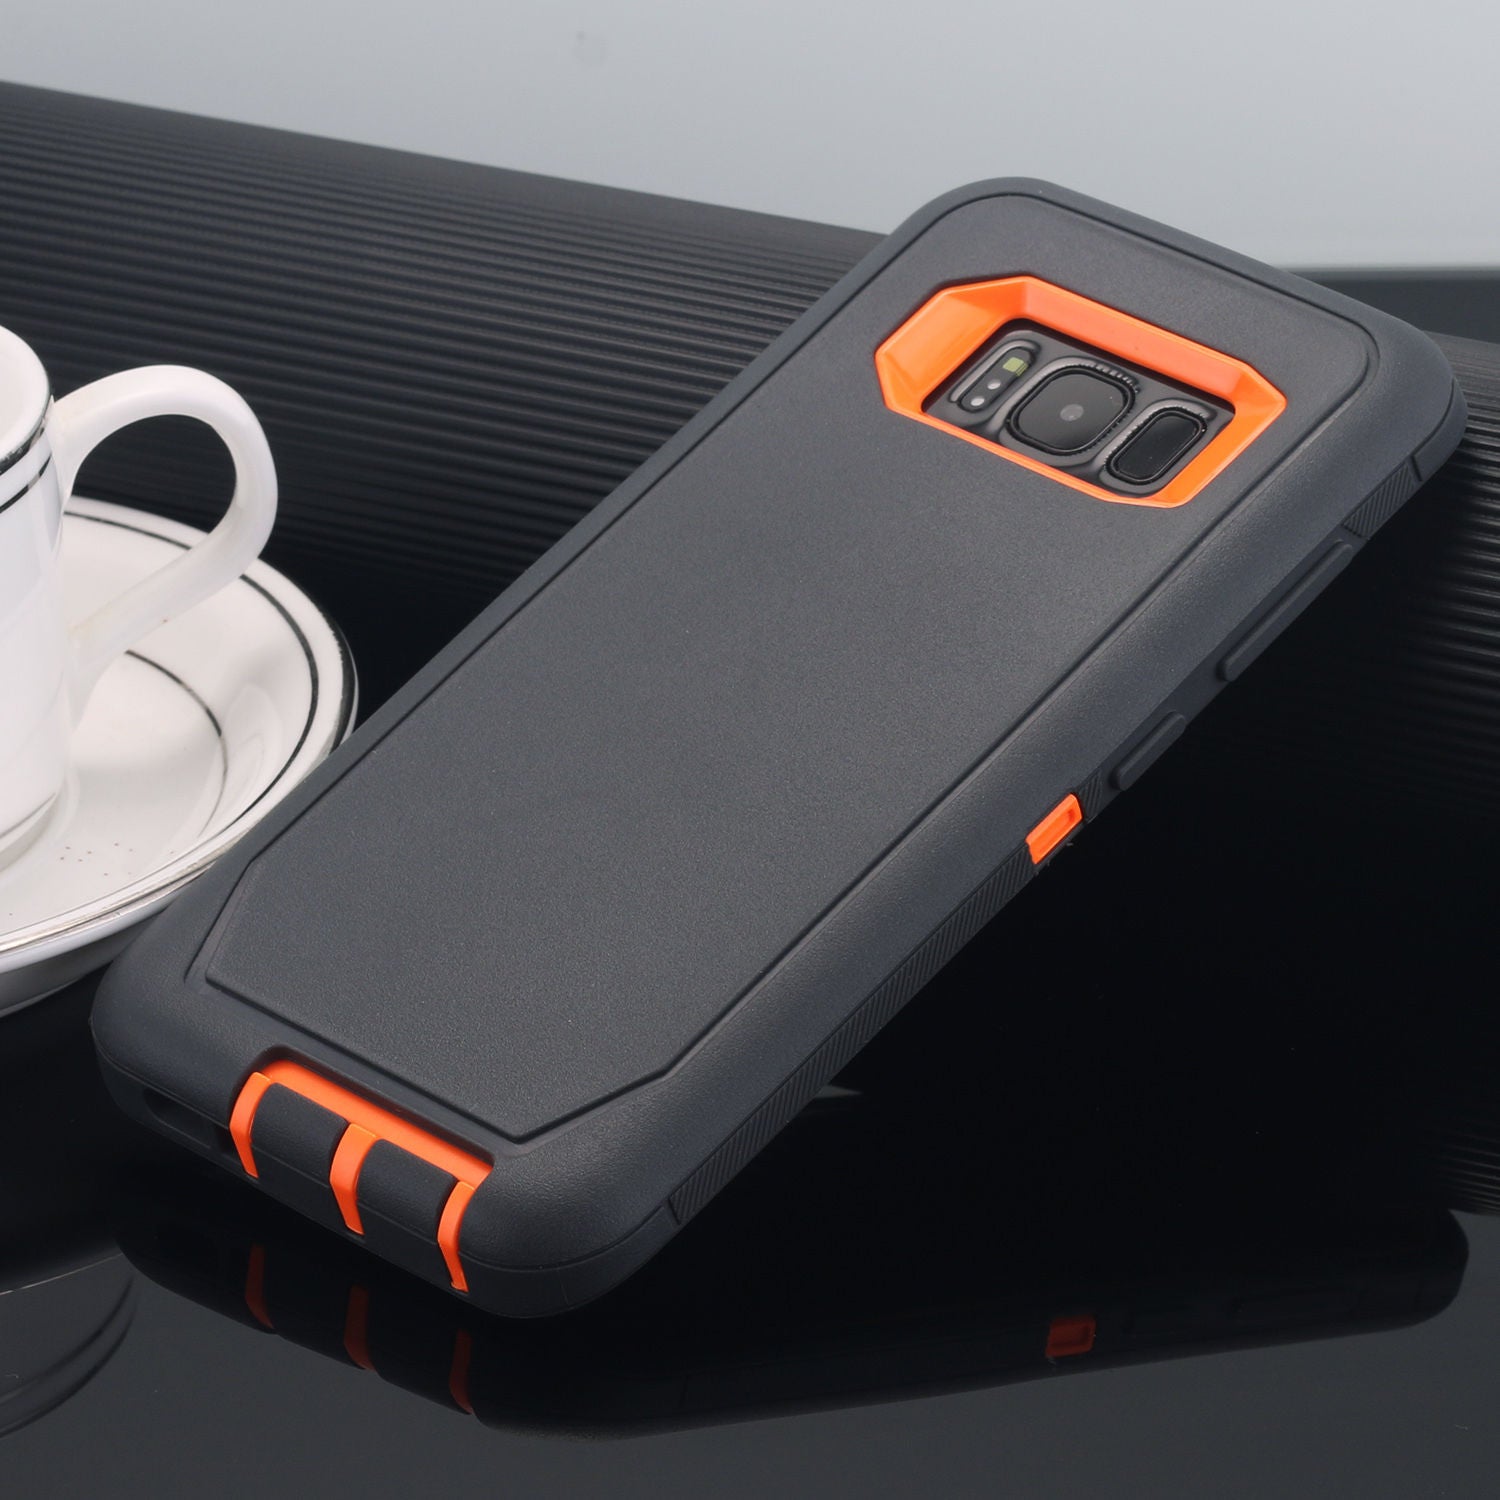 Samsung Galaxy S9 Case Shockproof Hybrid Rubber Armor Rugged Cover-Dark Gray/Orange